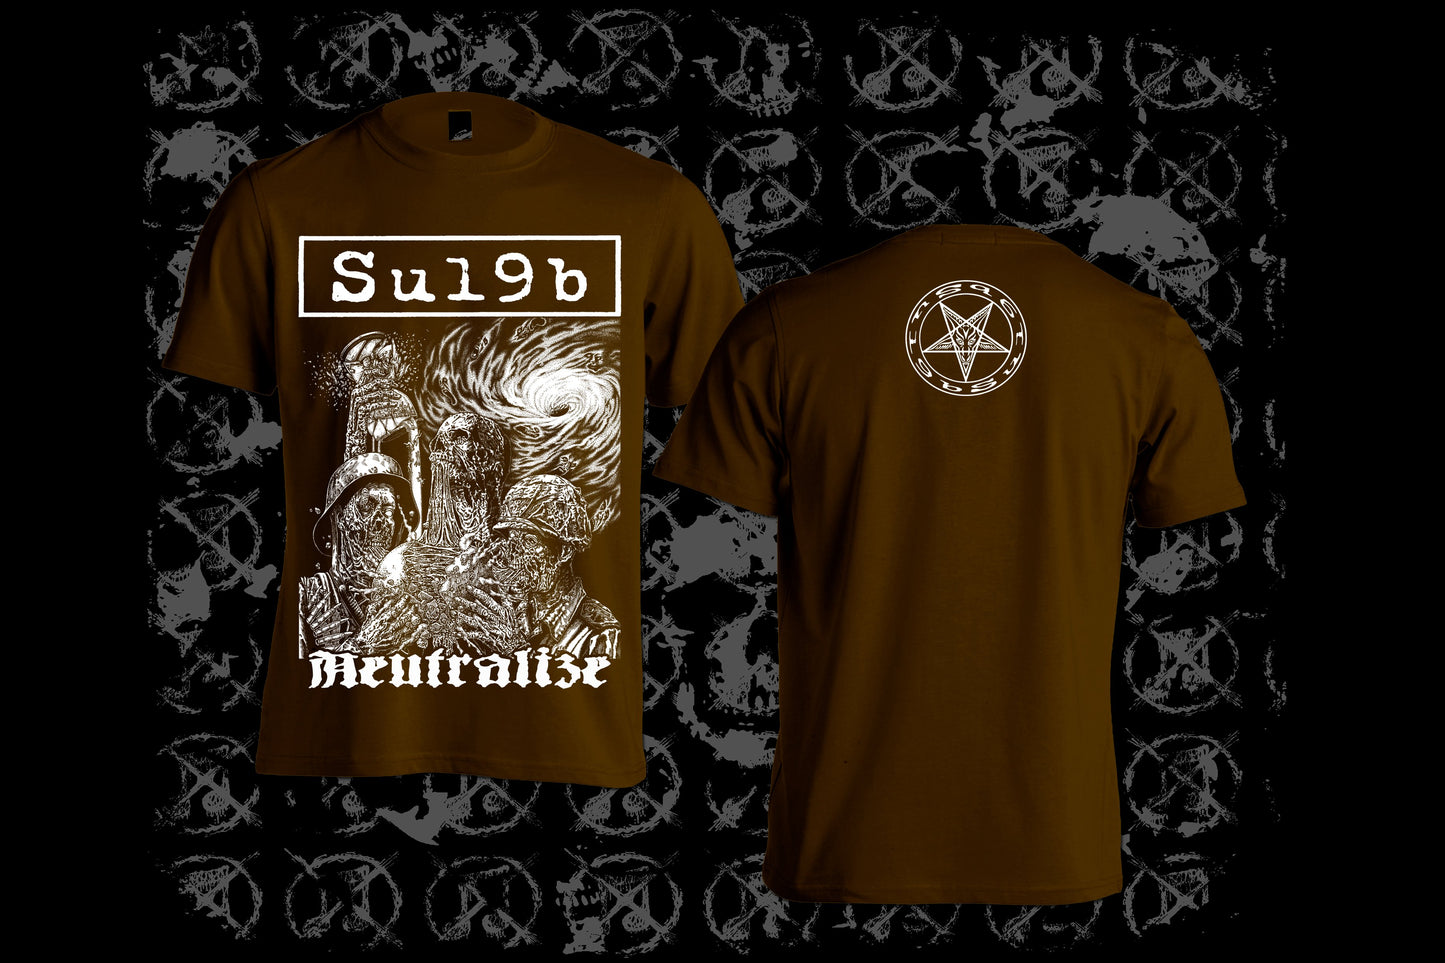 SU19B - Neatralize T-shirt